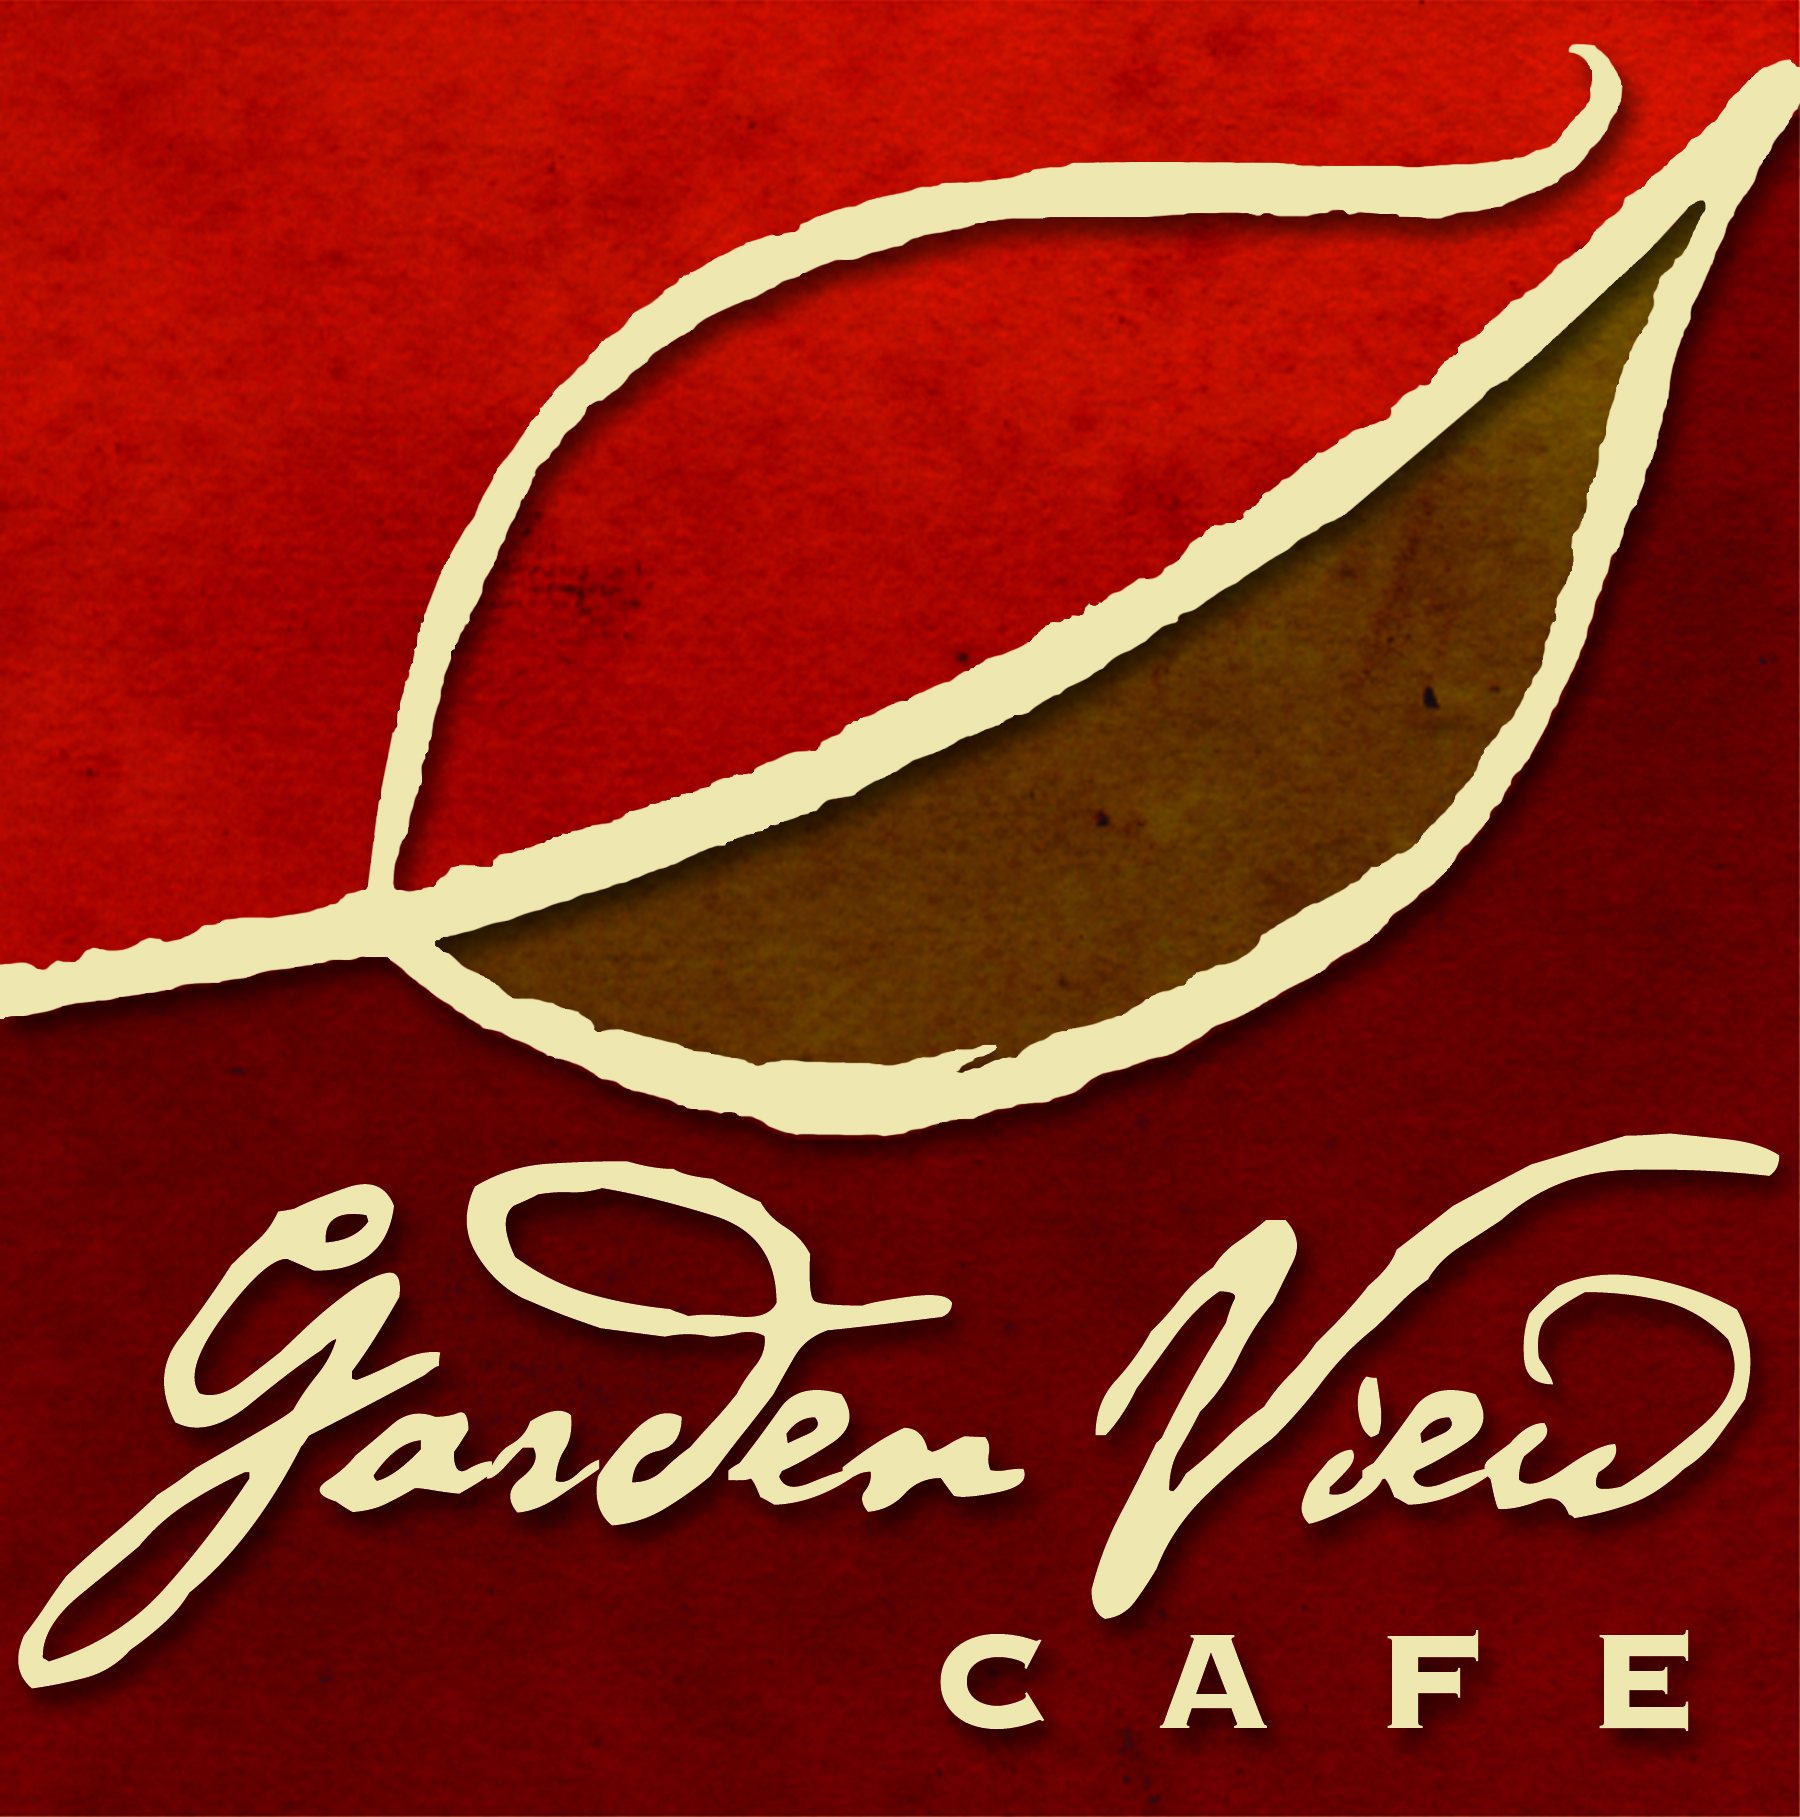 Garden View Café at United Hospital Center